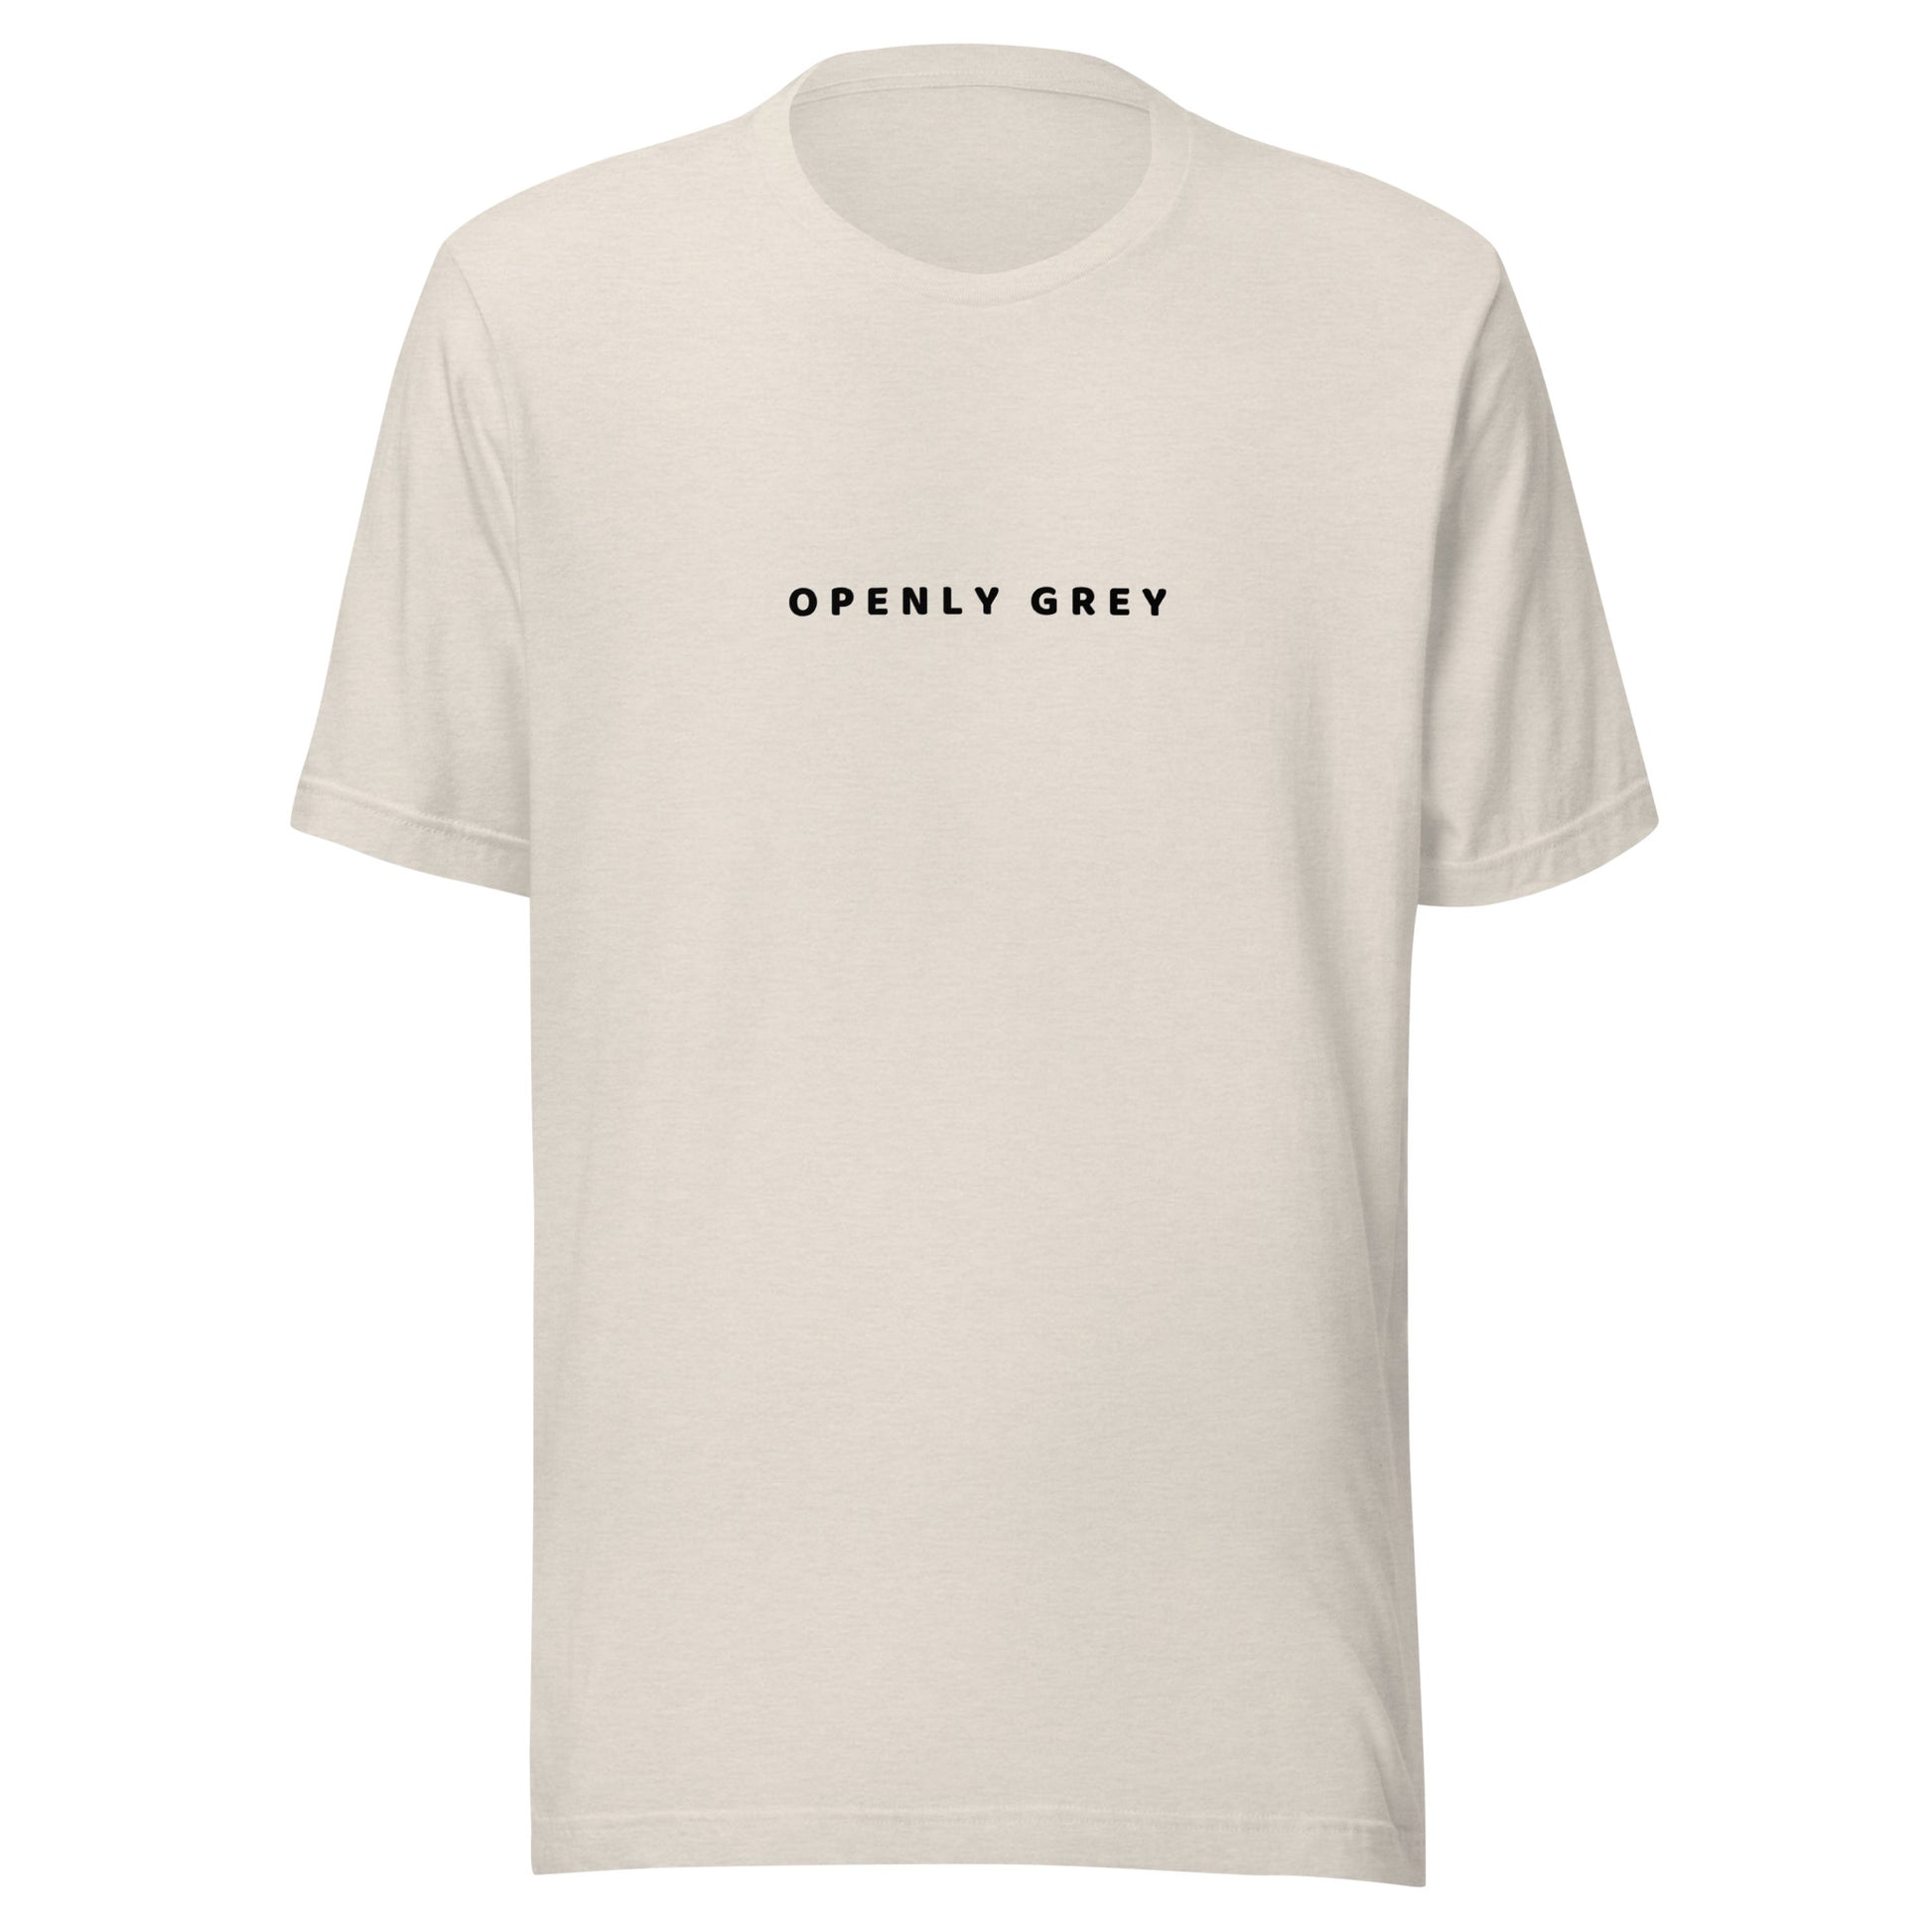 Openly Grey T-Shirt | Art in Aging